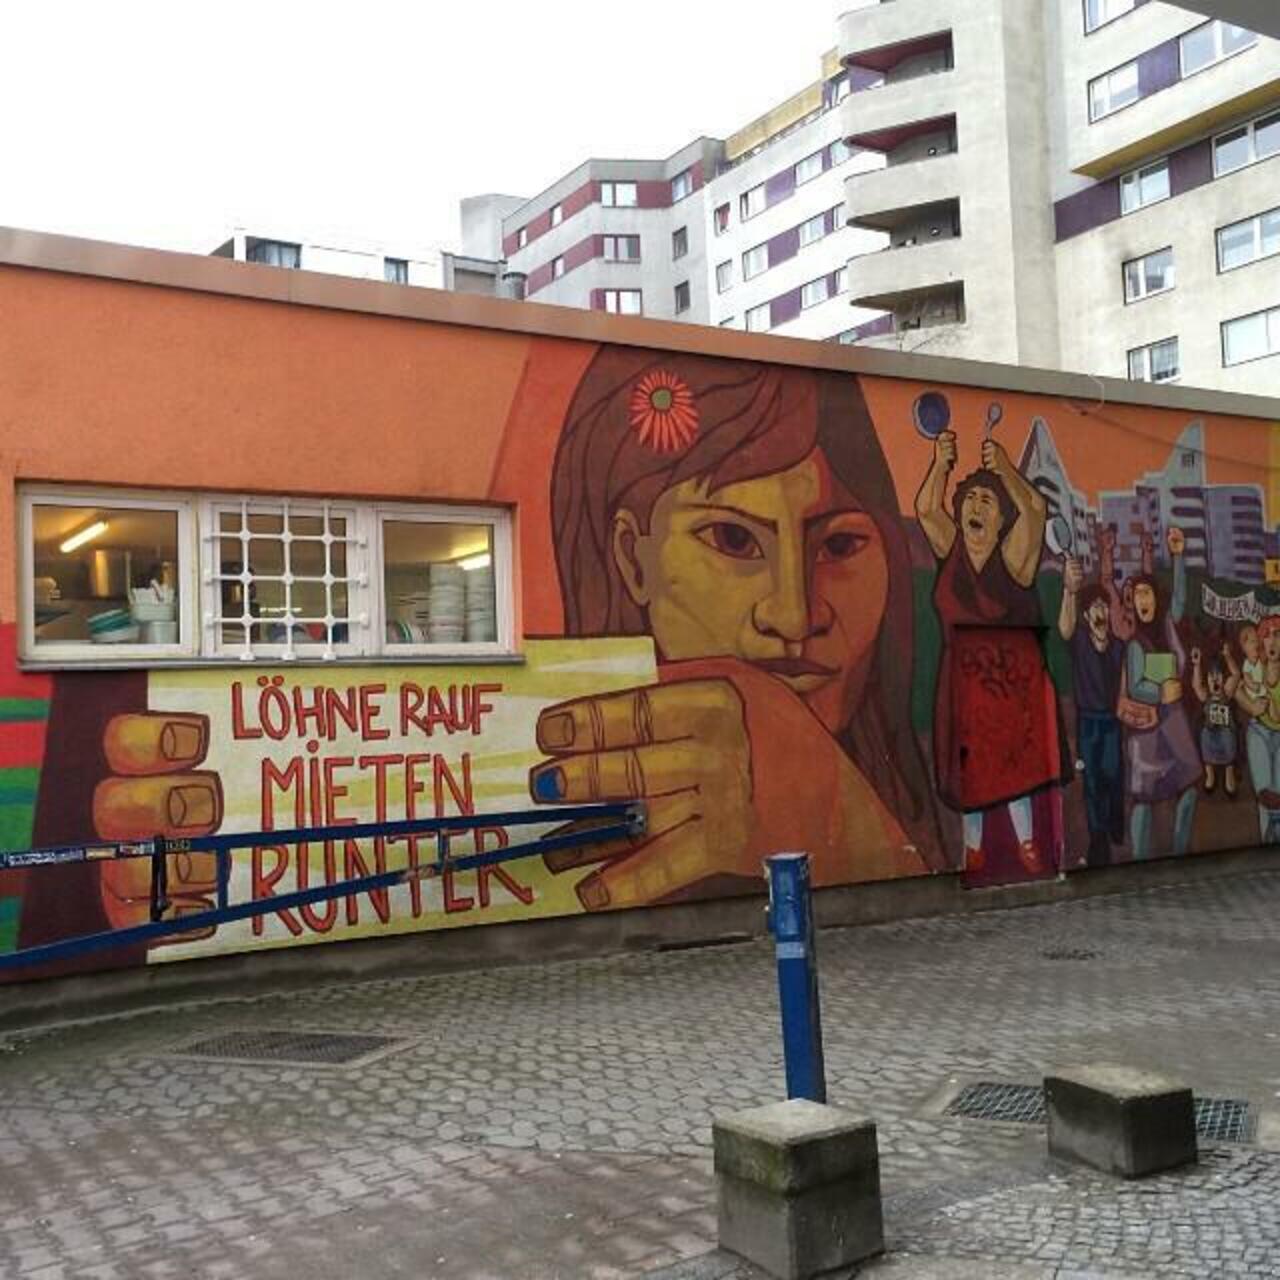 #Berlin #Allemagne #streetart #street #art #urbanart #urbantag #graffiti #streetartberlin by becombegeek http://t.co/lUtOwEZEQ2